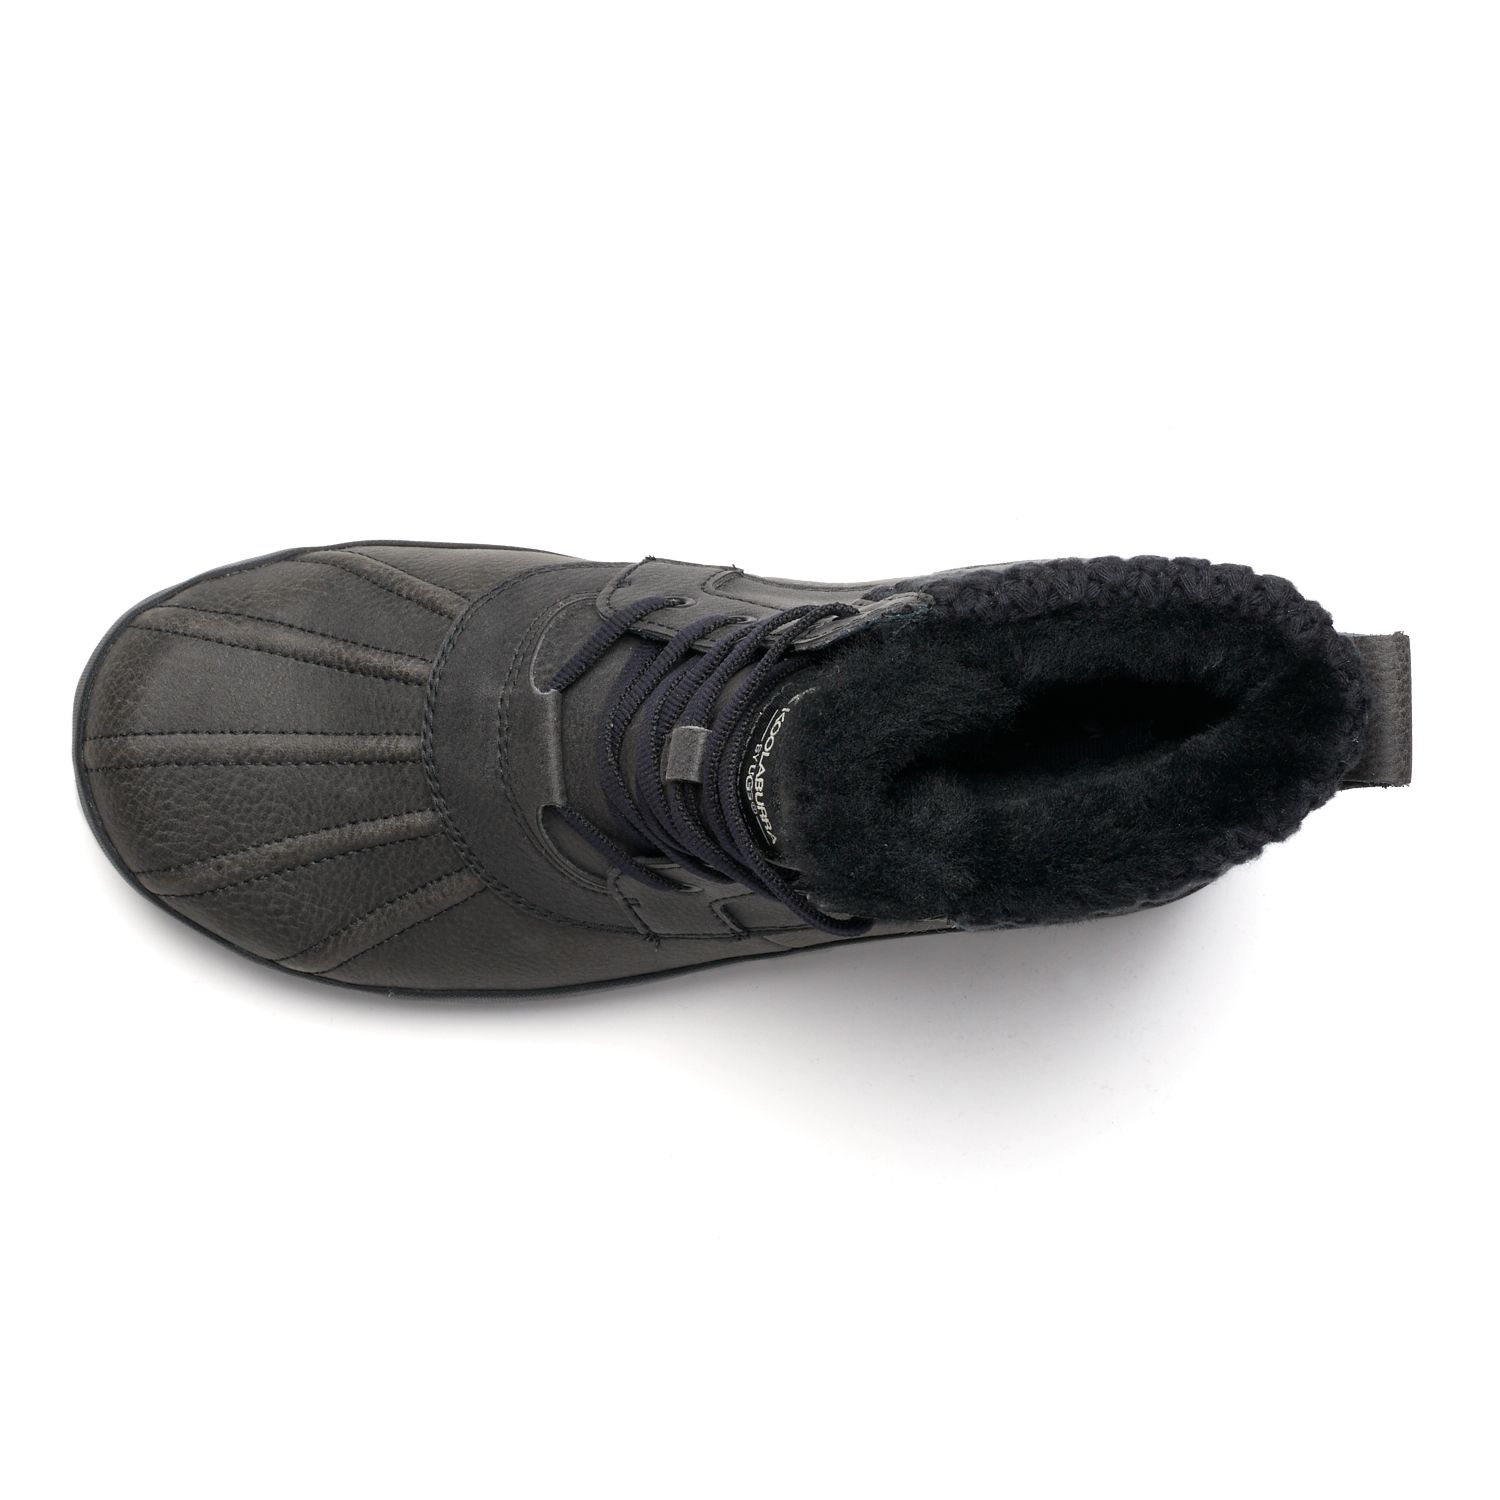 koolaburra by ugg sylia waterproof winter boot